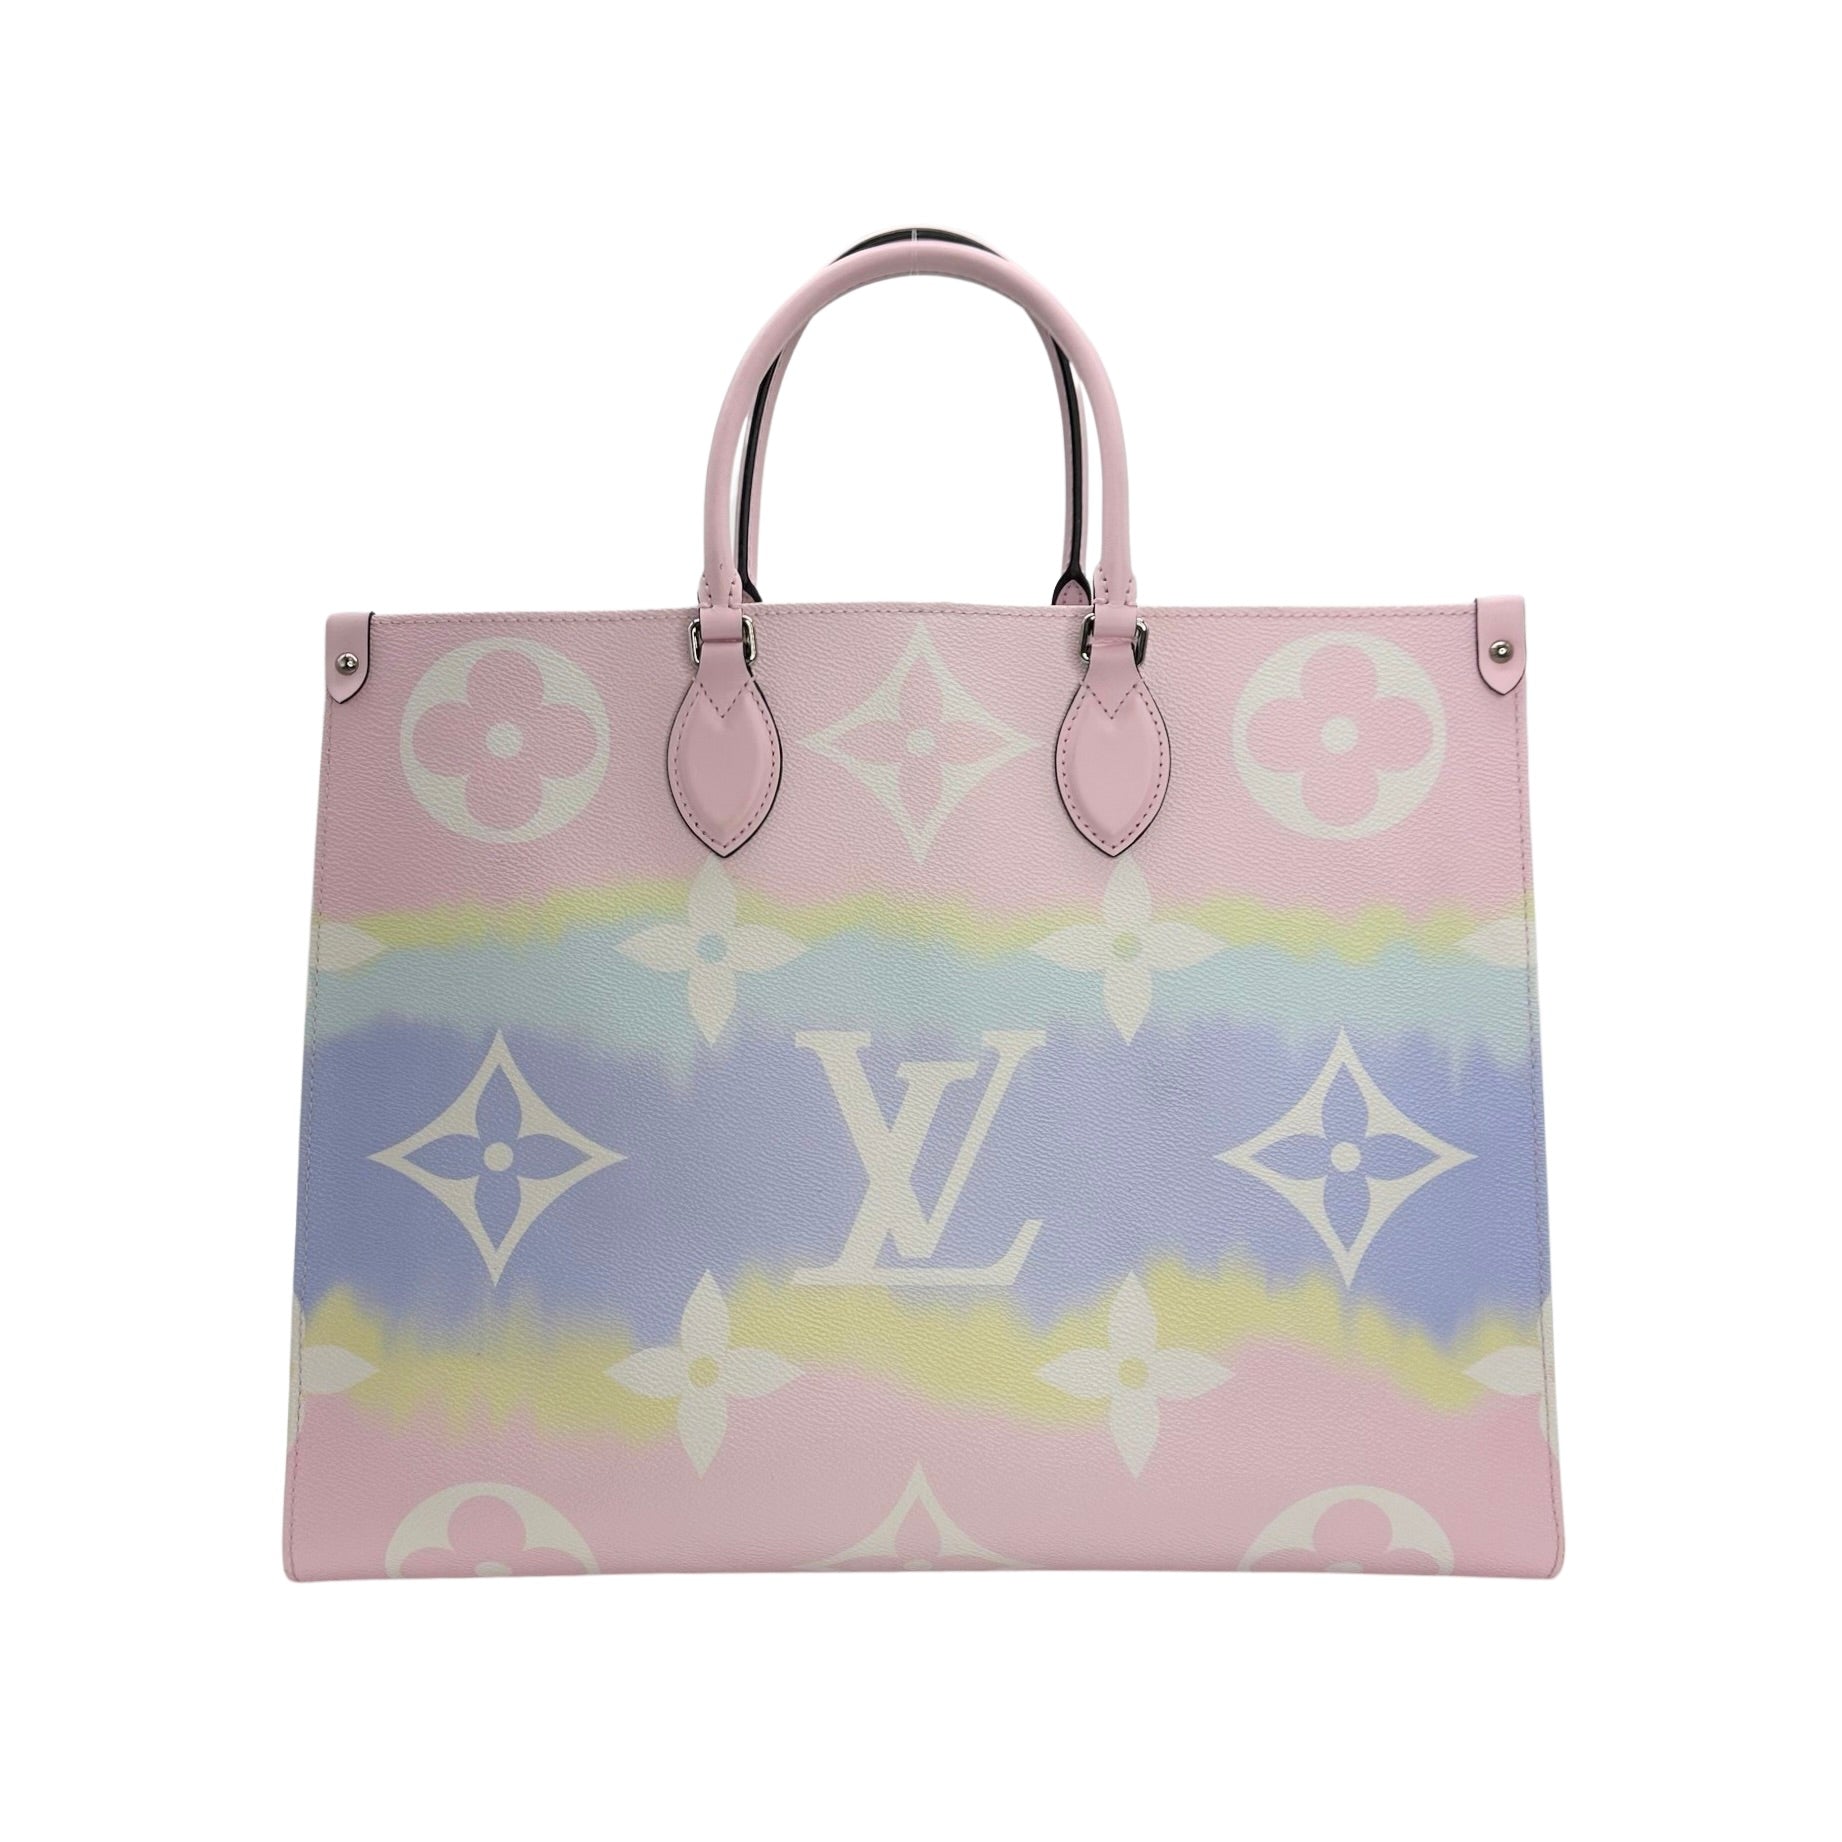 Louis-Vuitton Design #Luxurydotcom via LV